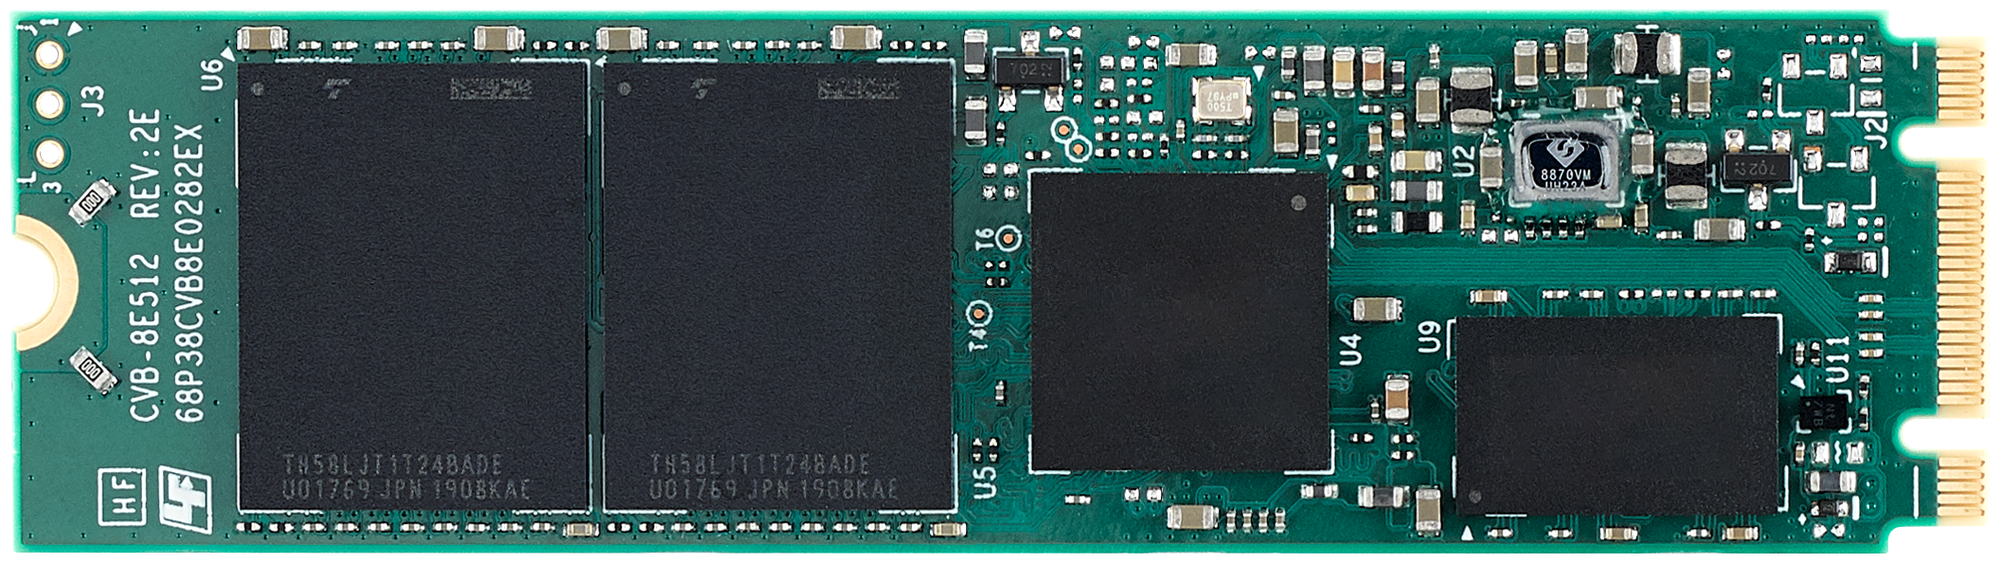 Твердотельный накопитель 512Gb SSD Plextor M8VG Plus (PX-512M8VG+)